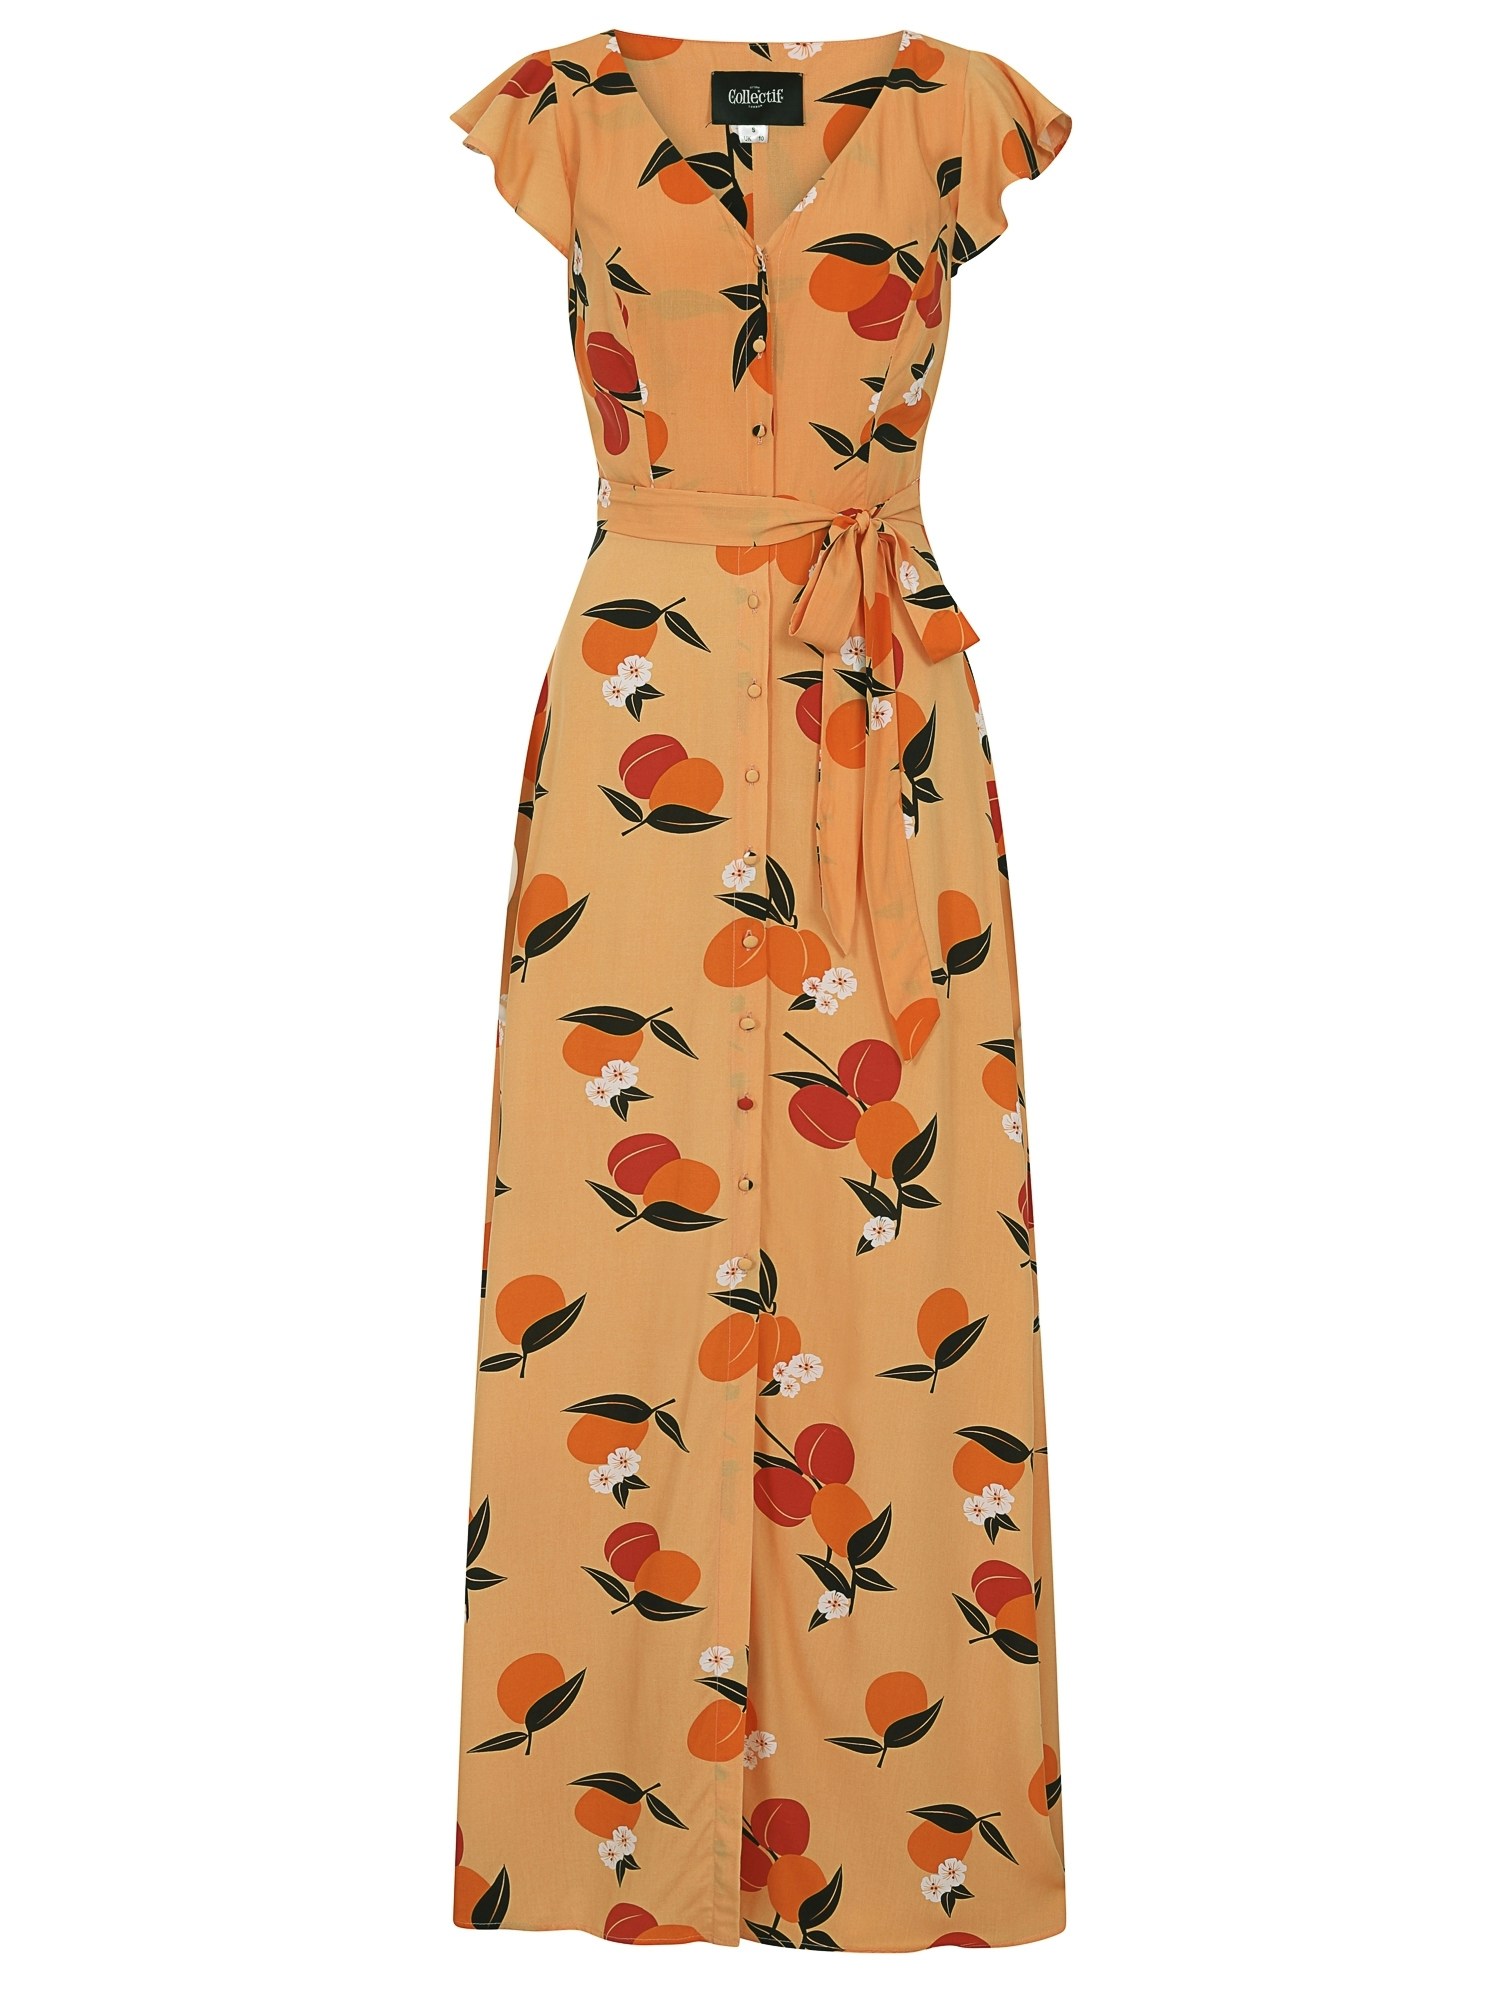 Collectif Mainline Thelma Mid-Century Apricot Maxi Dress £69